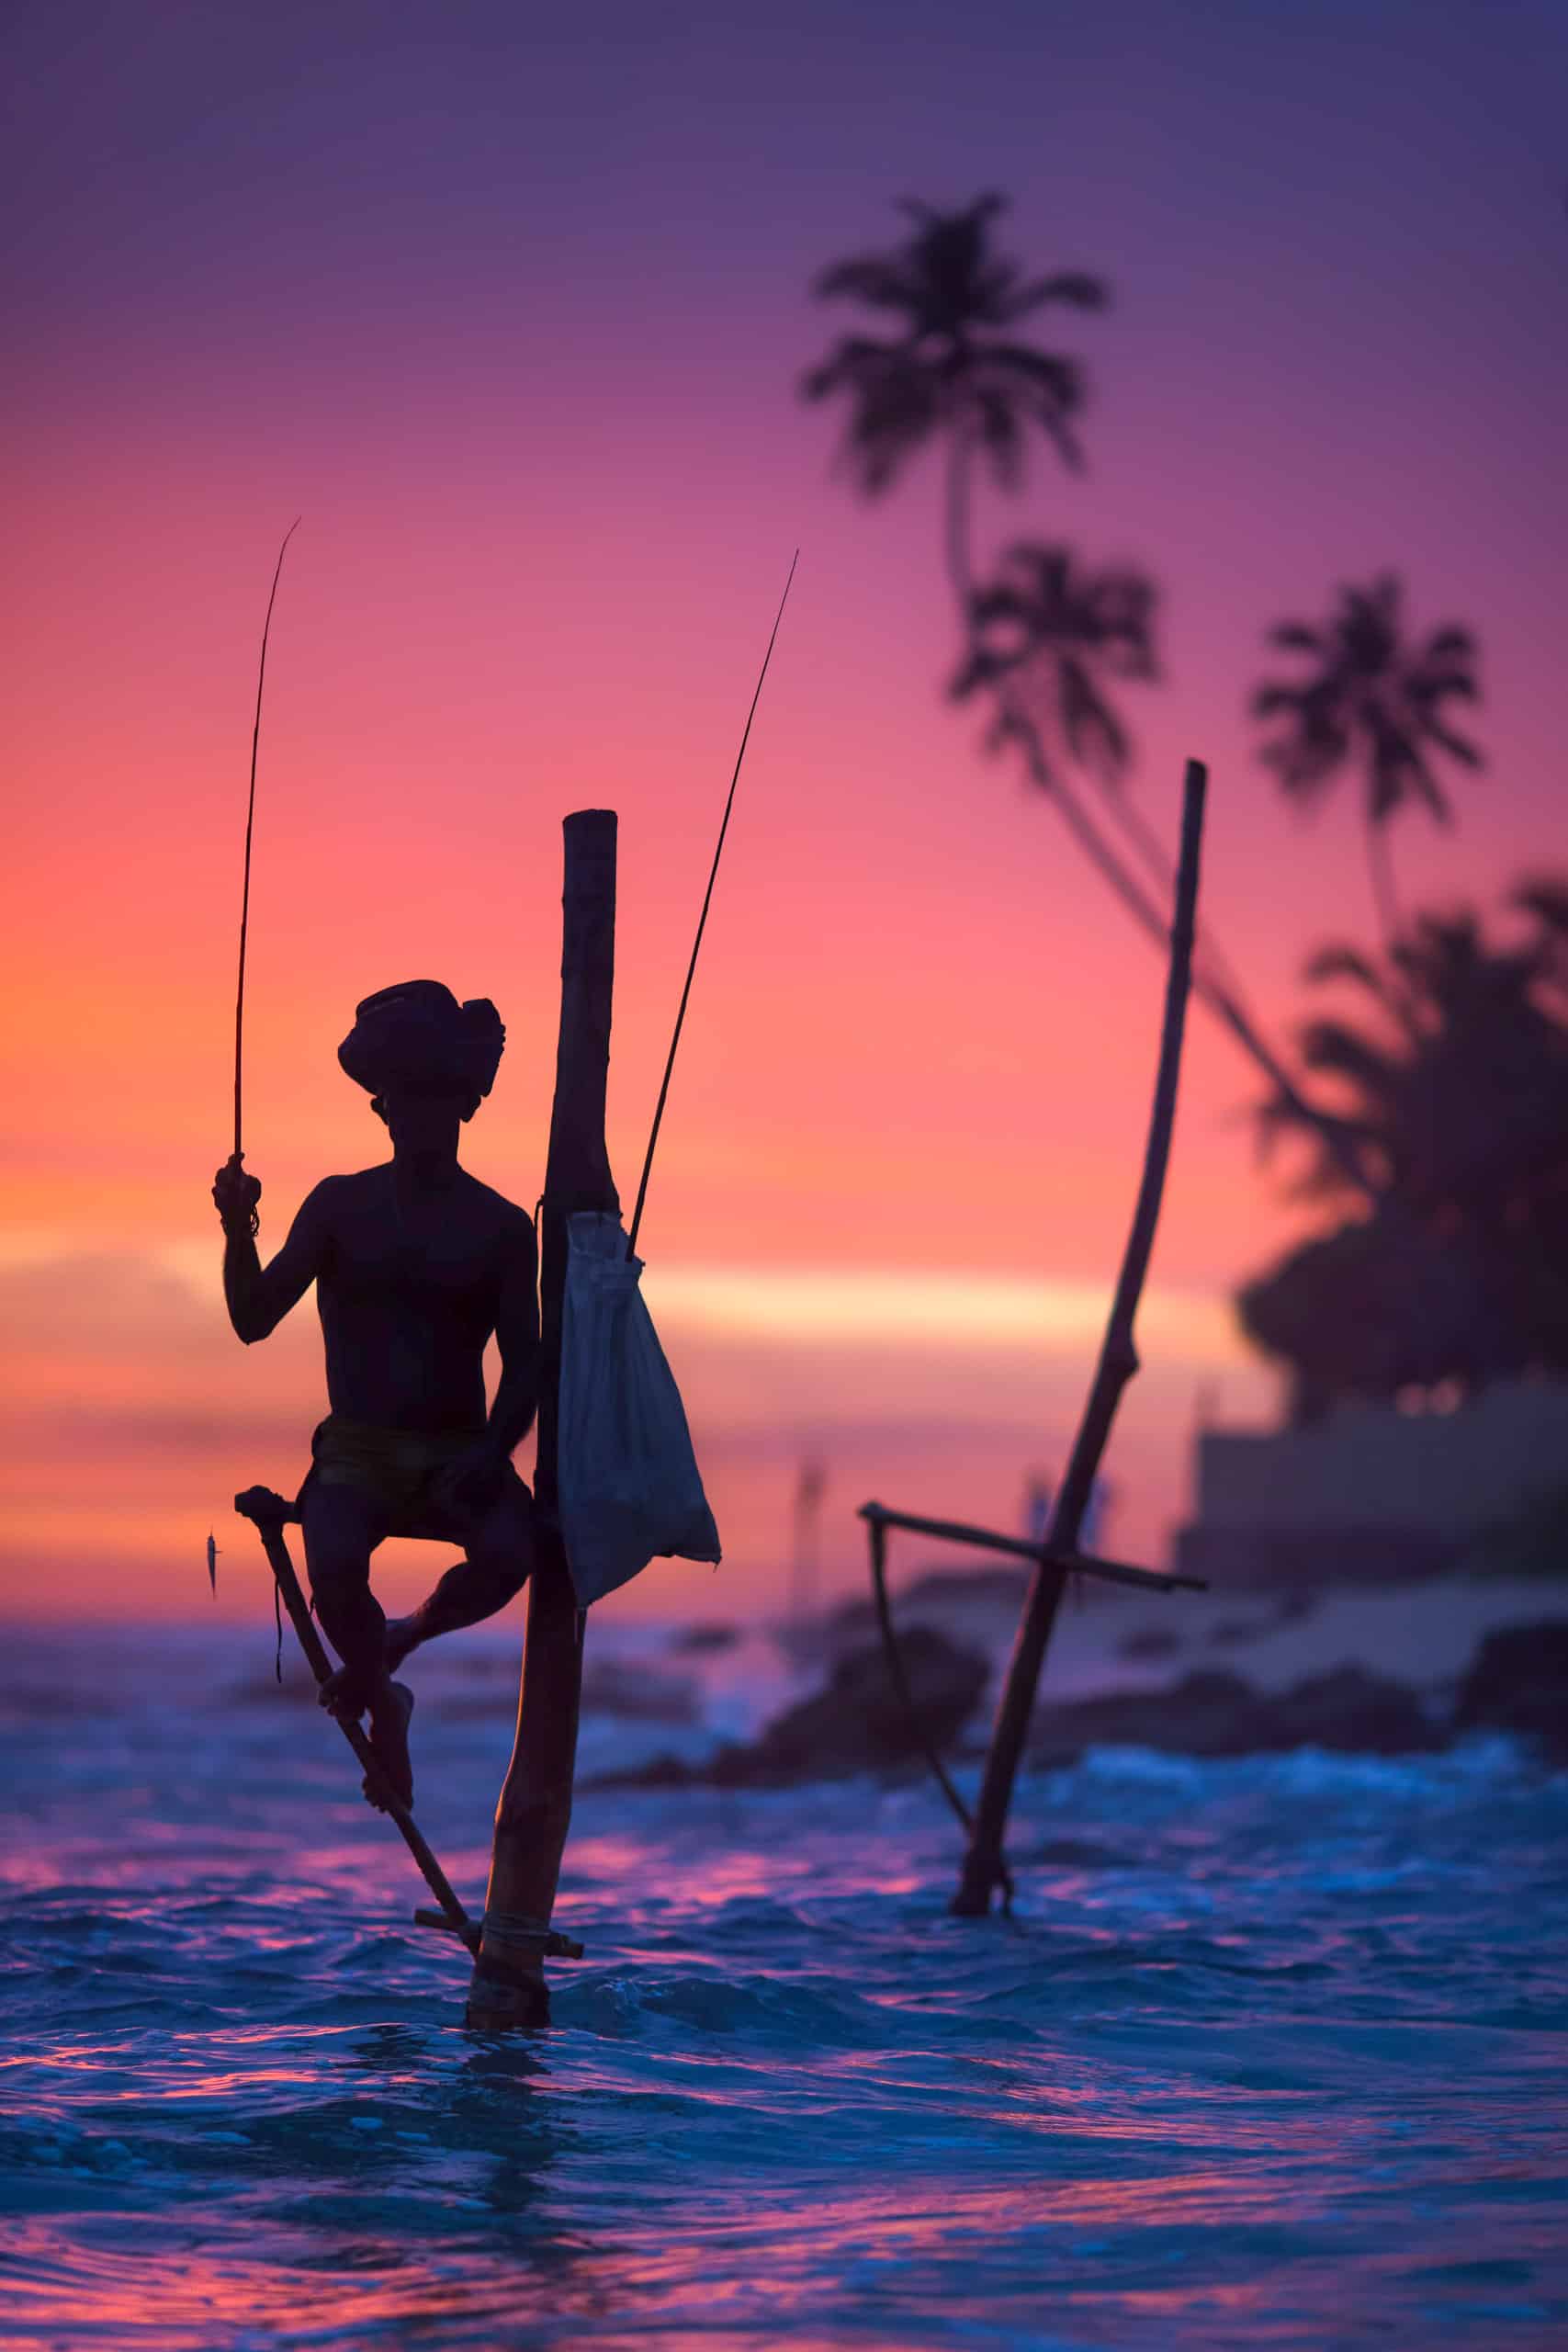 A stilt fisherman at sunset.